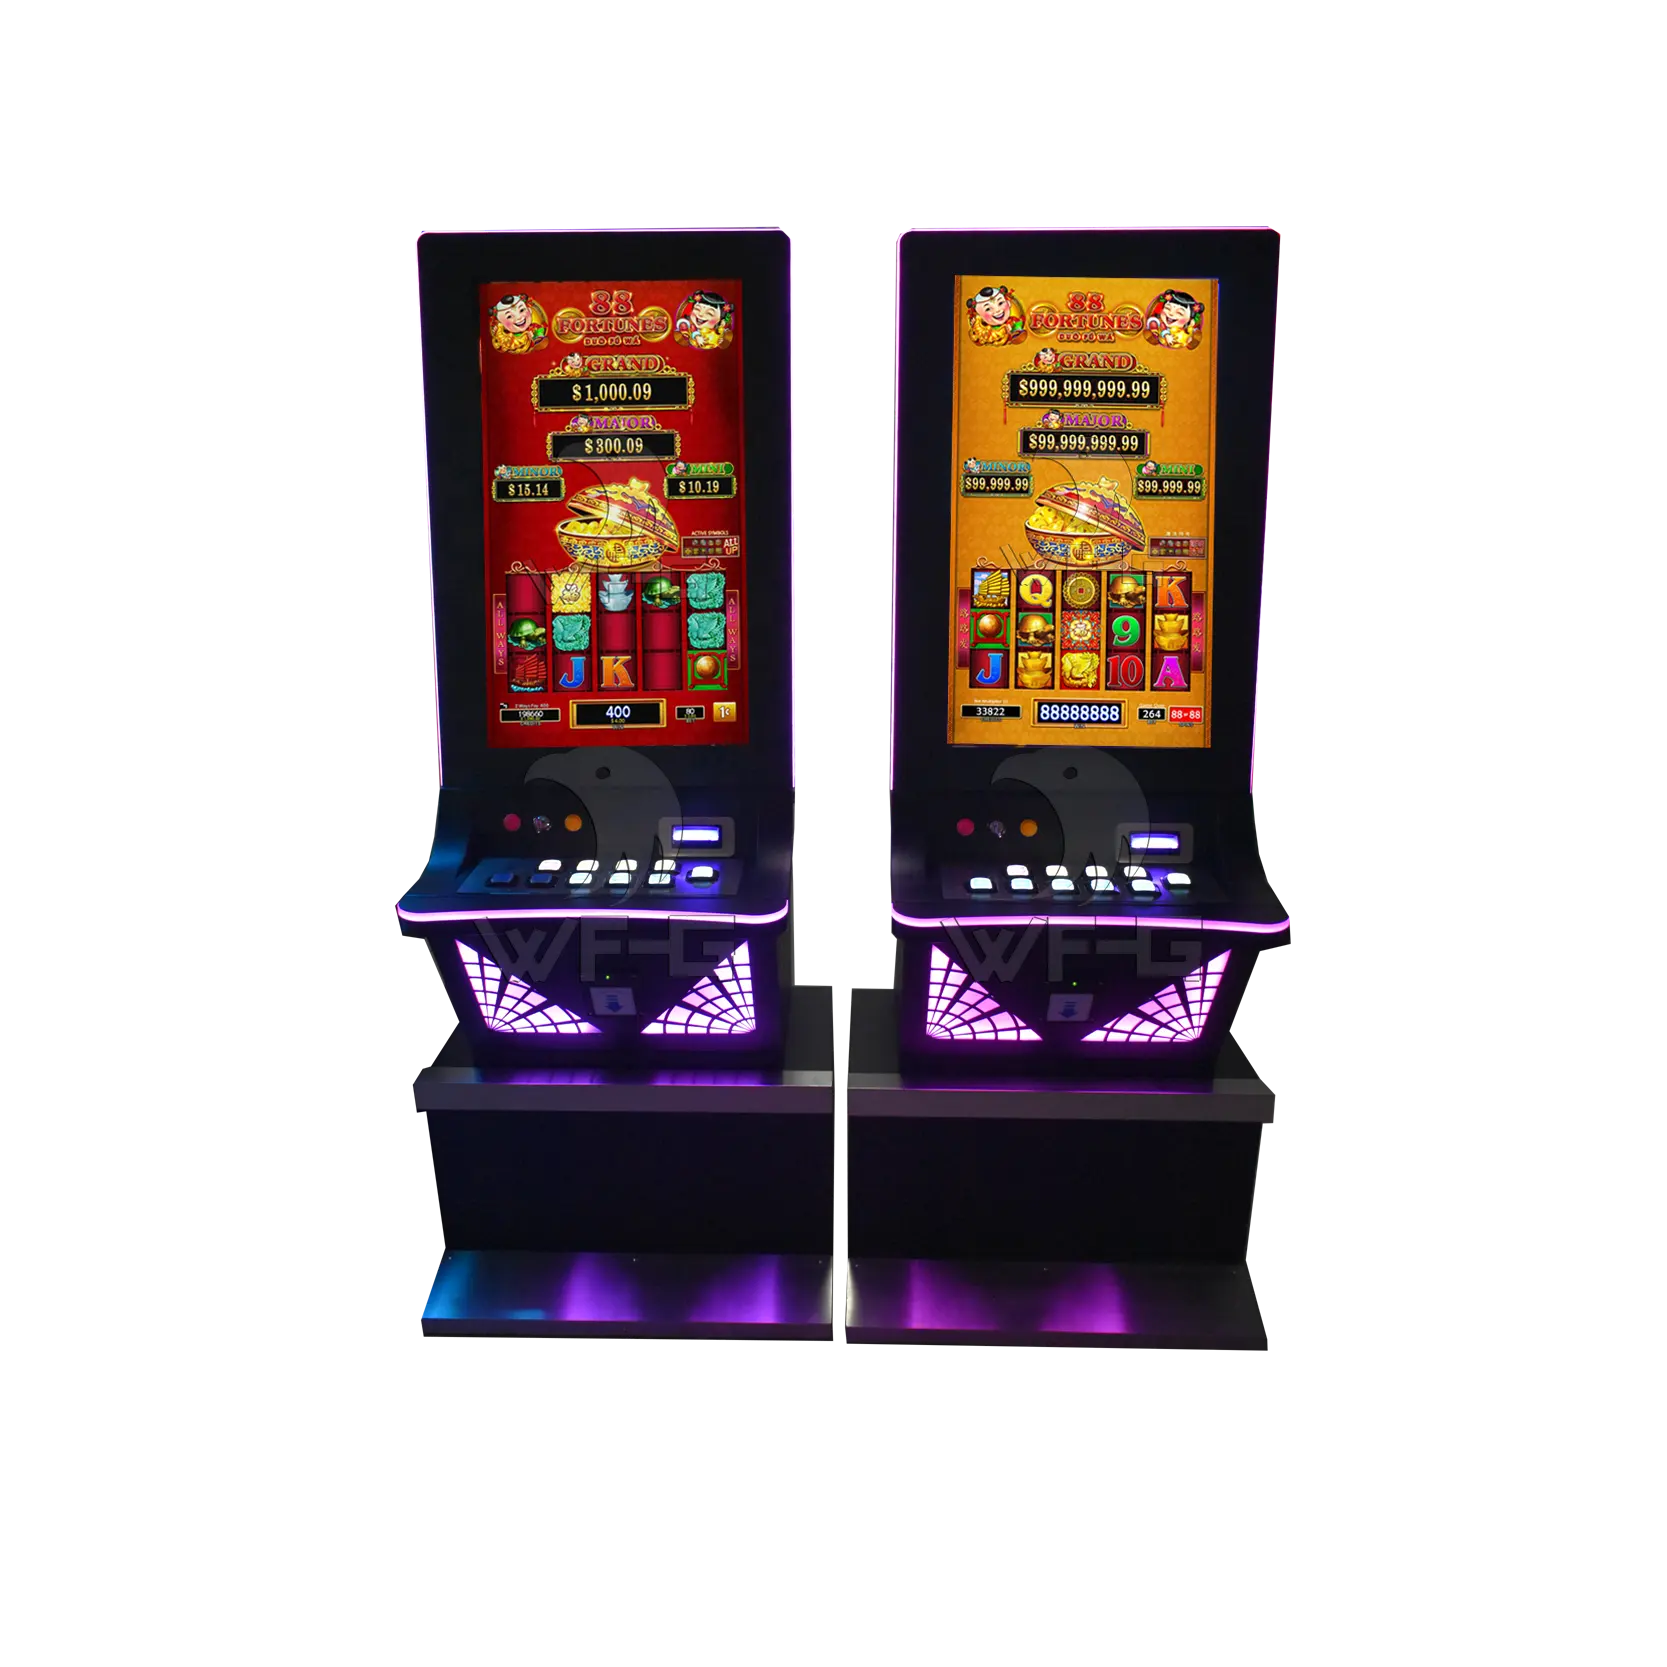 Juego de ranura de alta ganancia, 88 Fortunes / DUO FU DUO CAI vertical, pantalla LCD, máquina de juego de ranura